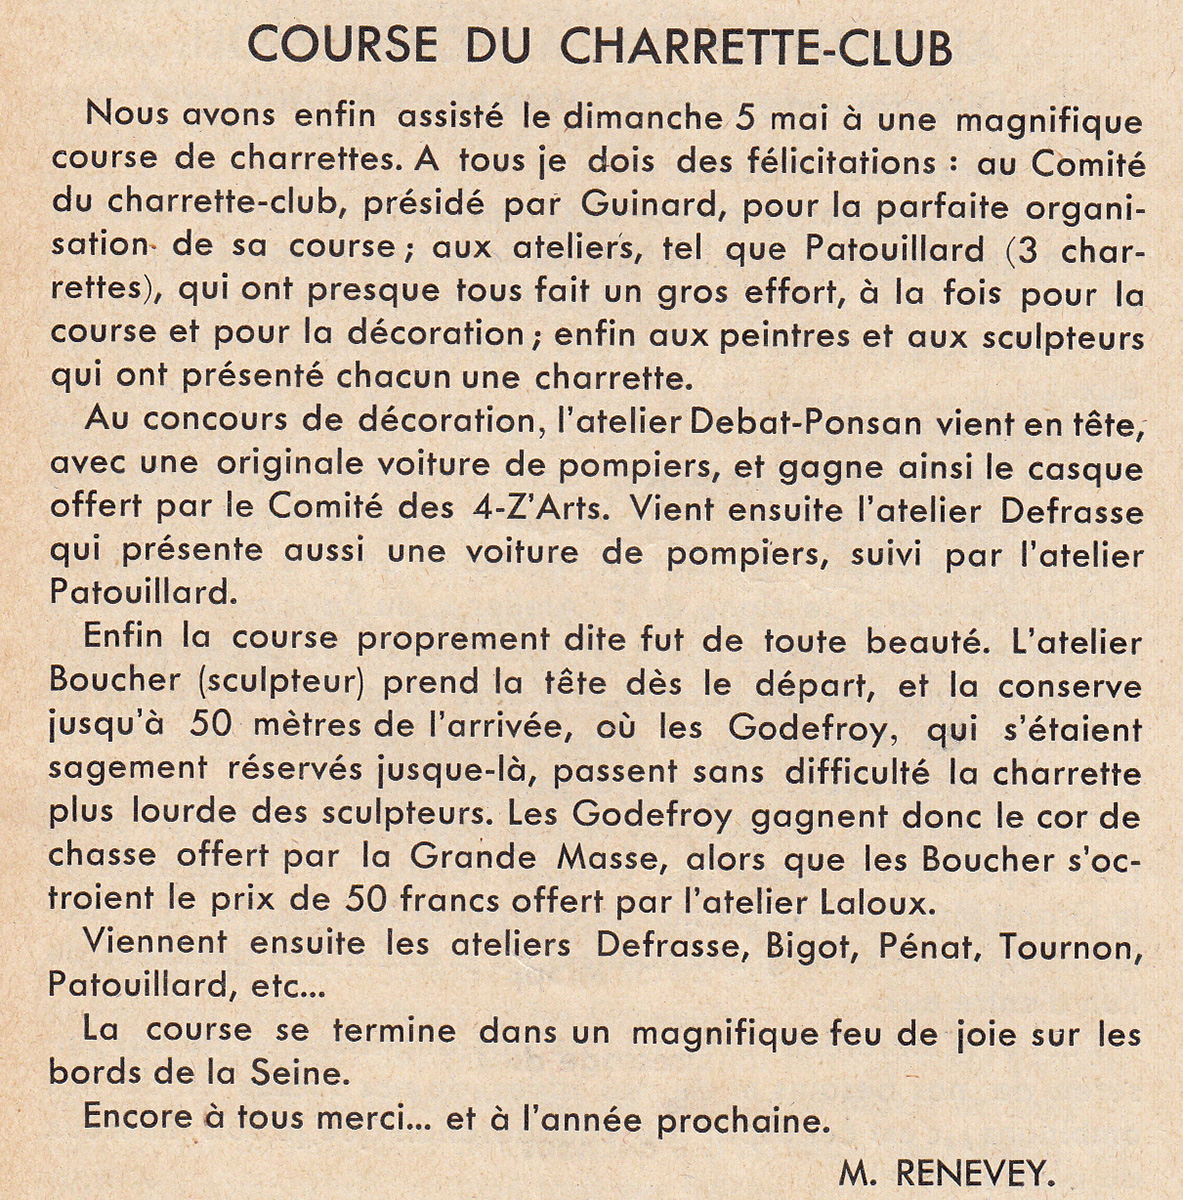 Charrette-club_Course-1935_Article-03.jpg